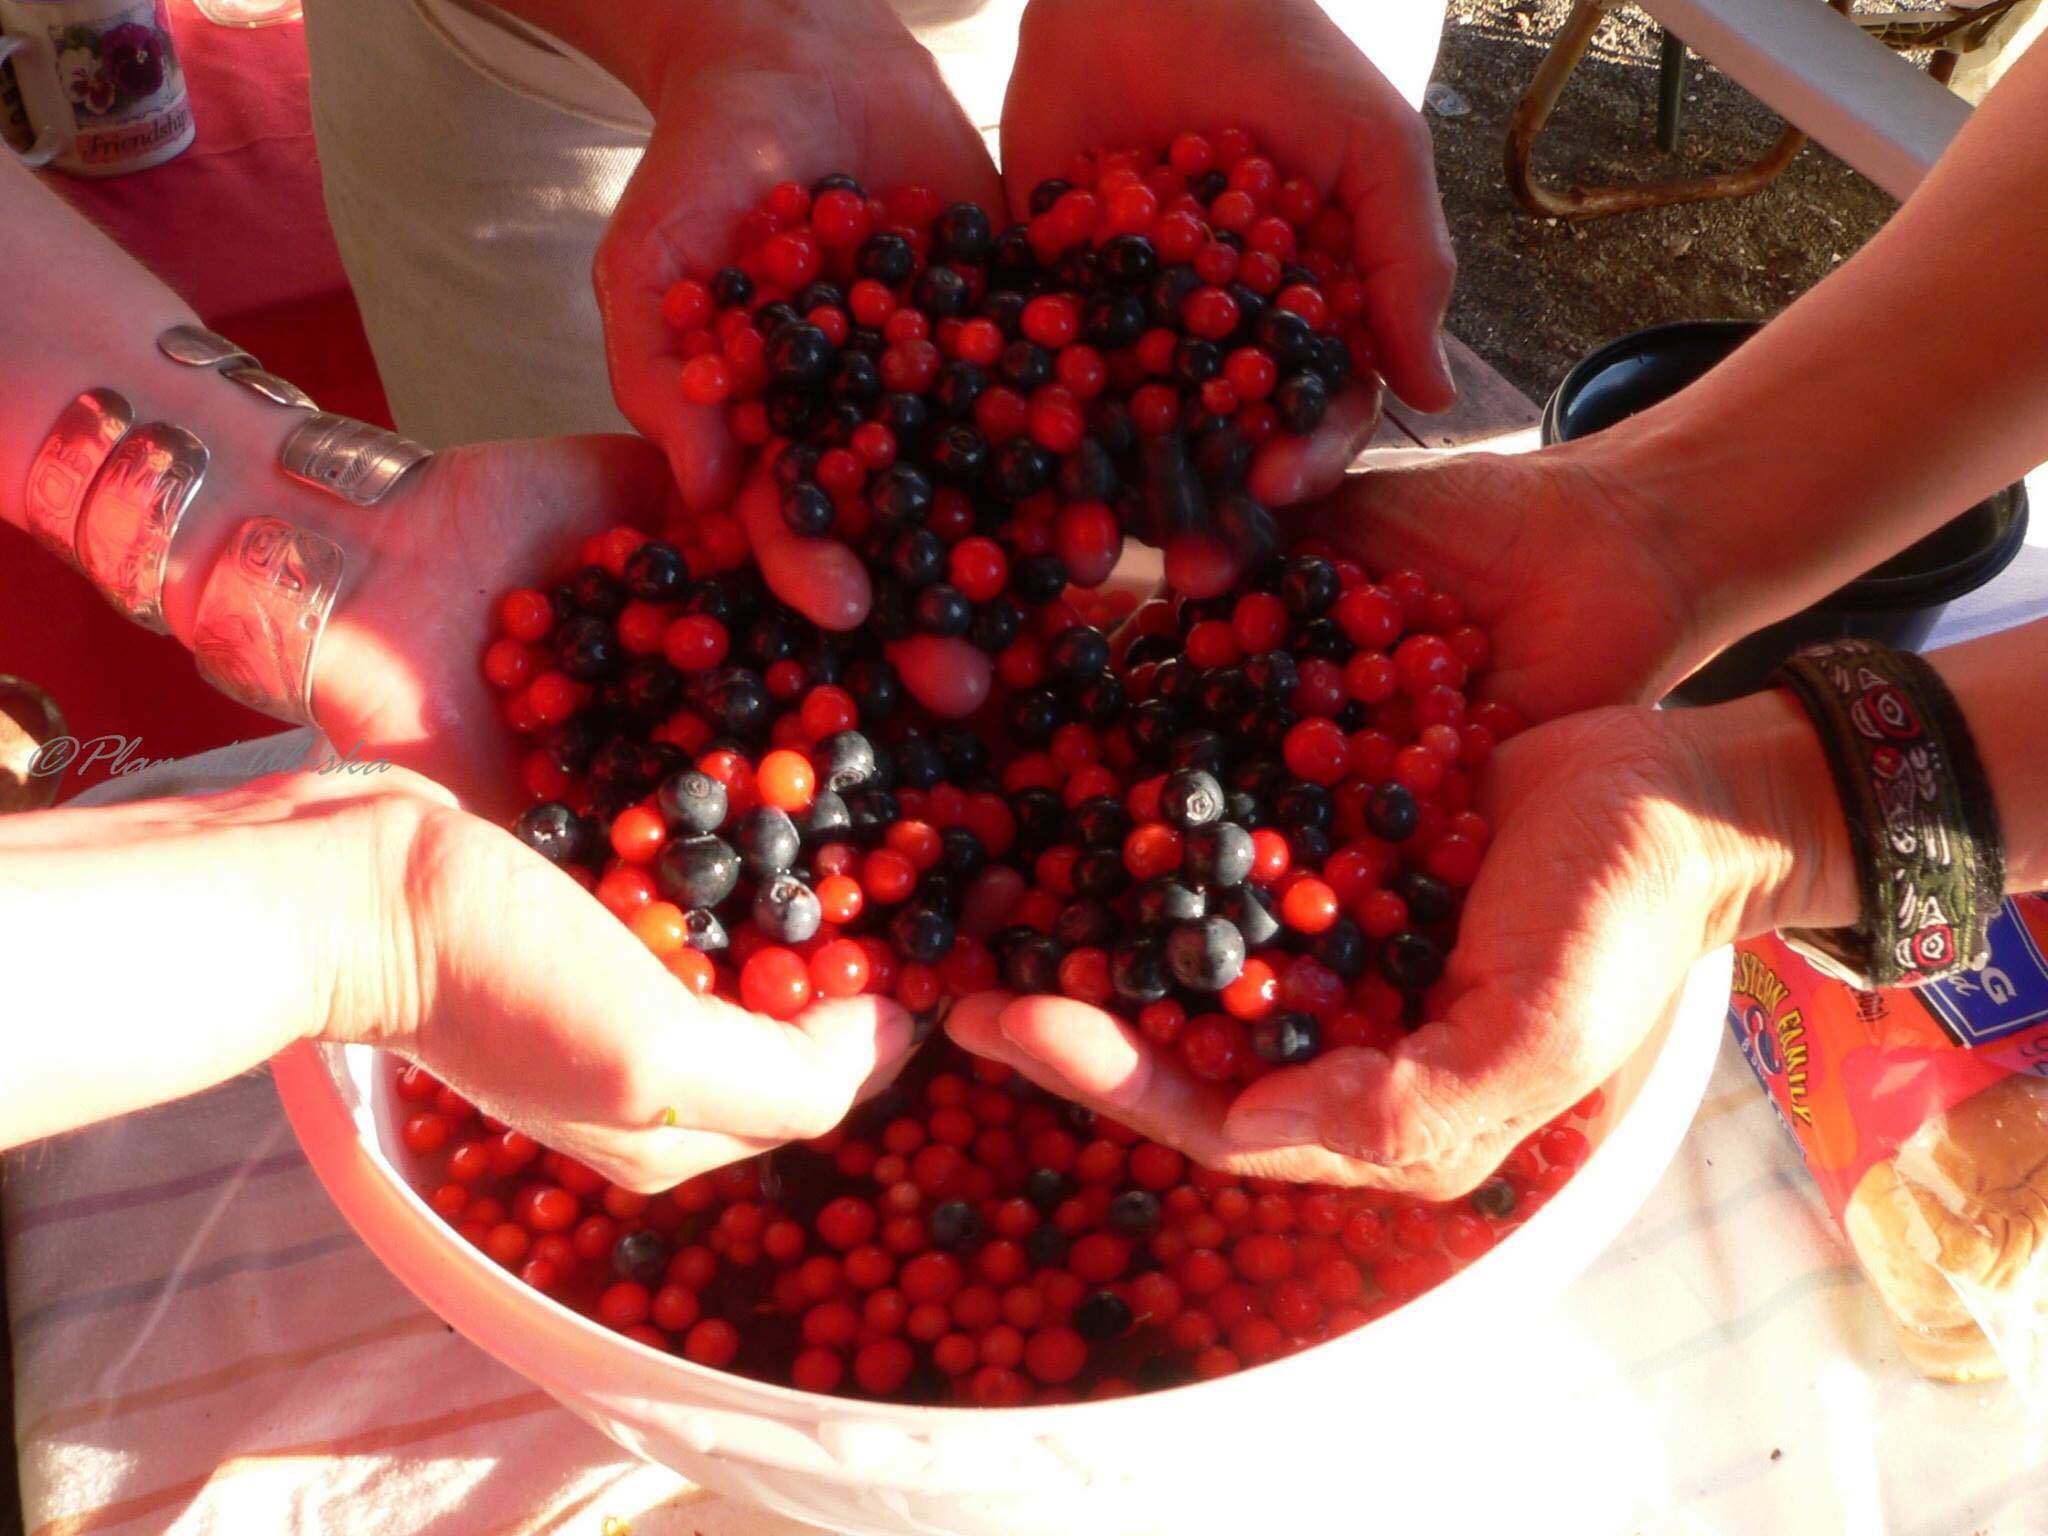 Hands hold freshly harvested berries. Photo by Vivian Mork Y&